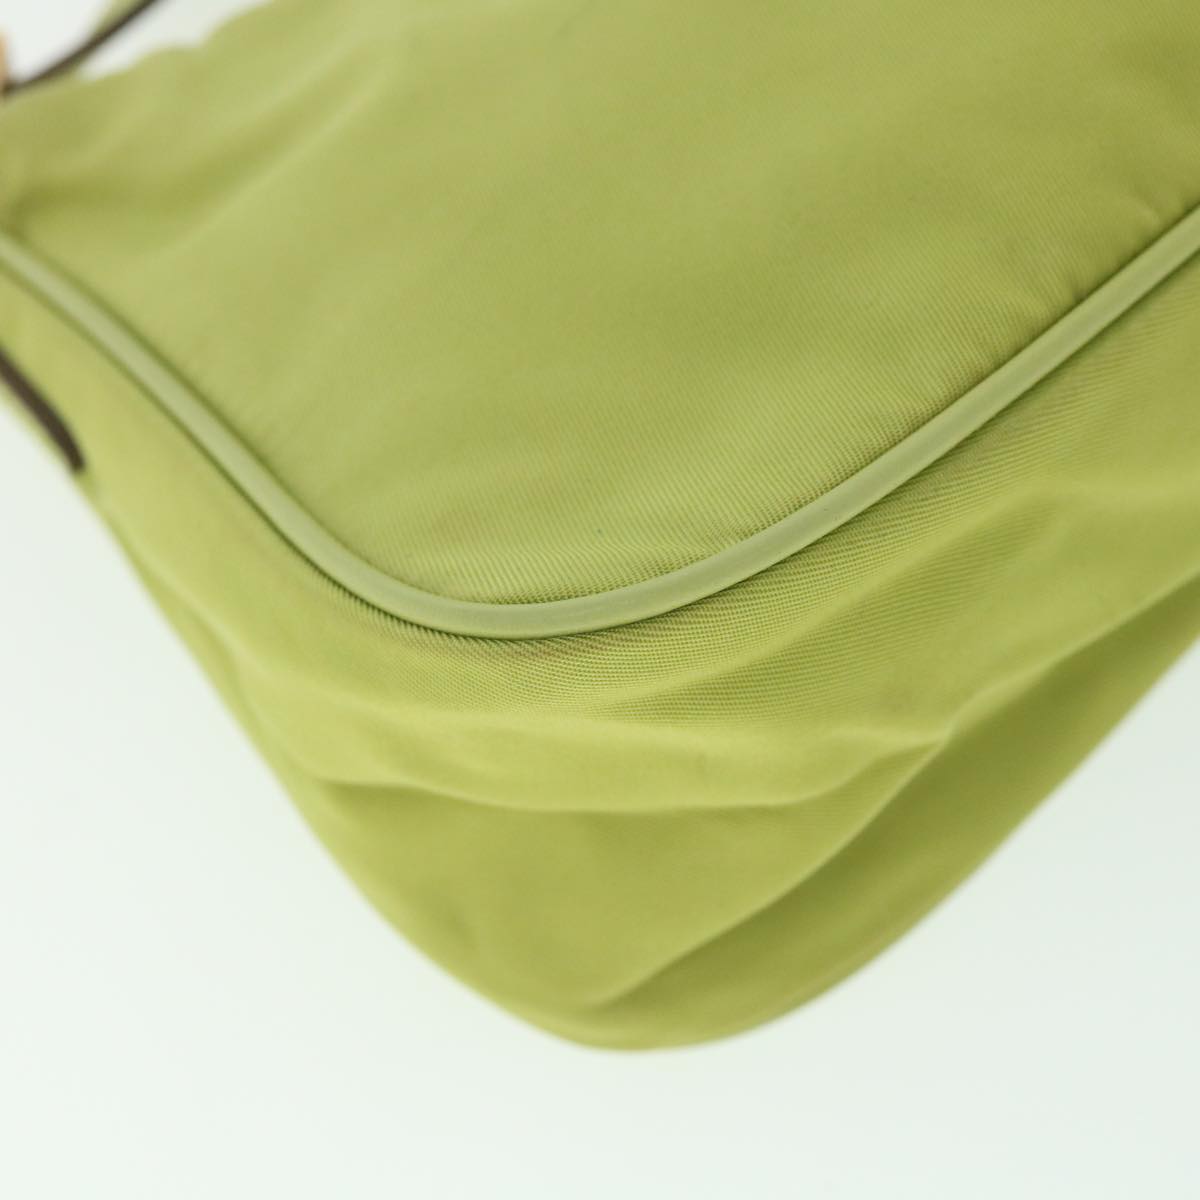 PRADA Chain Shoulder Bag Nylon Green Auth ar10470